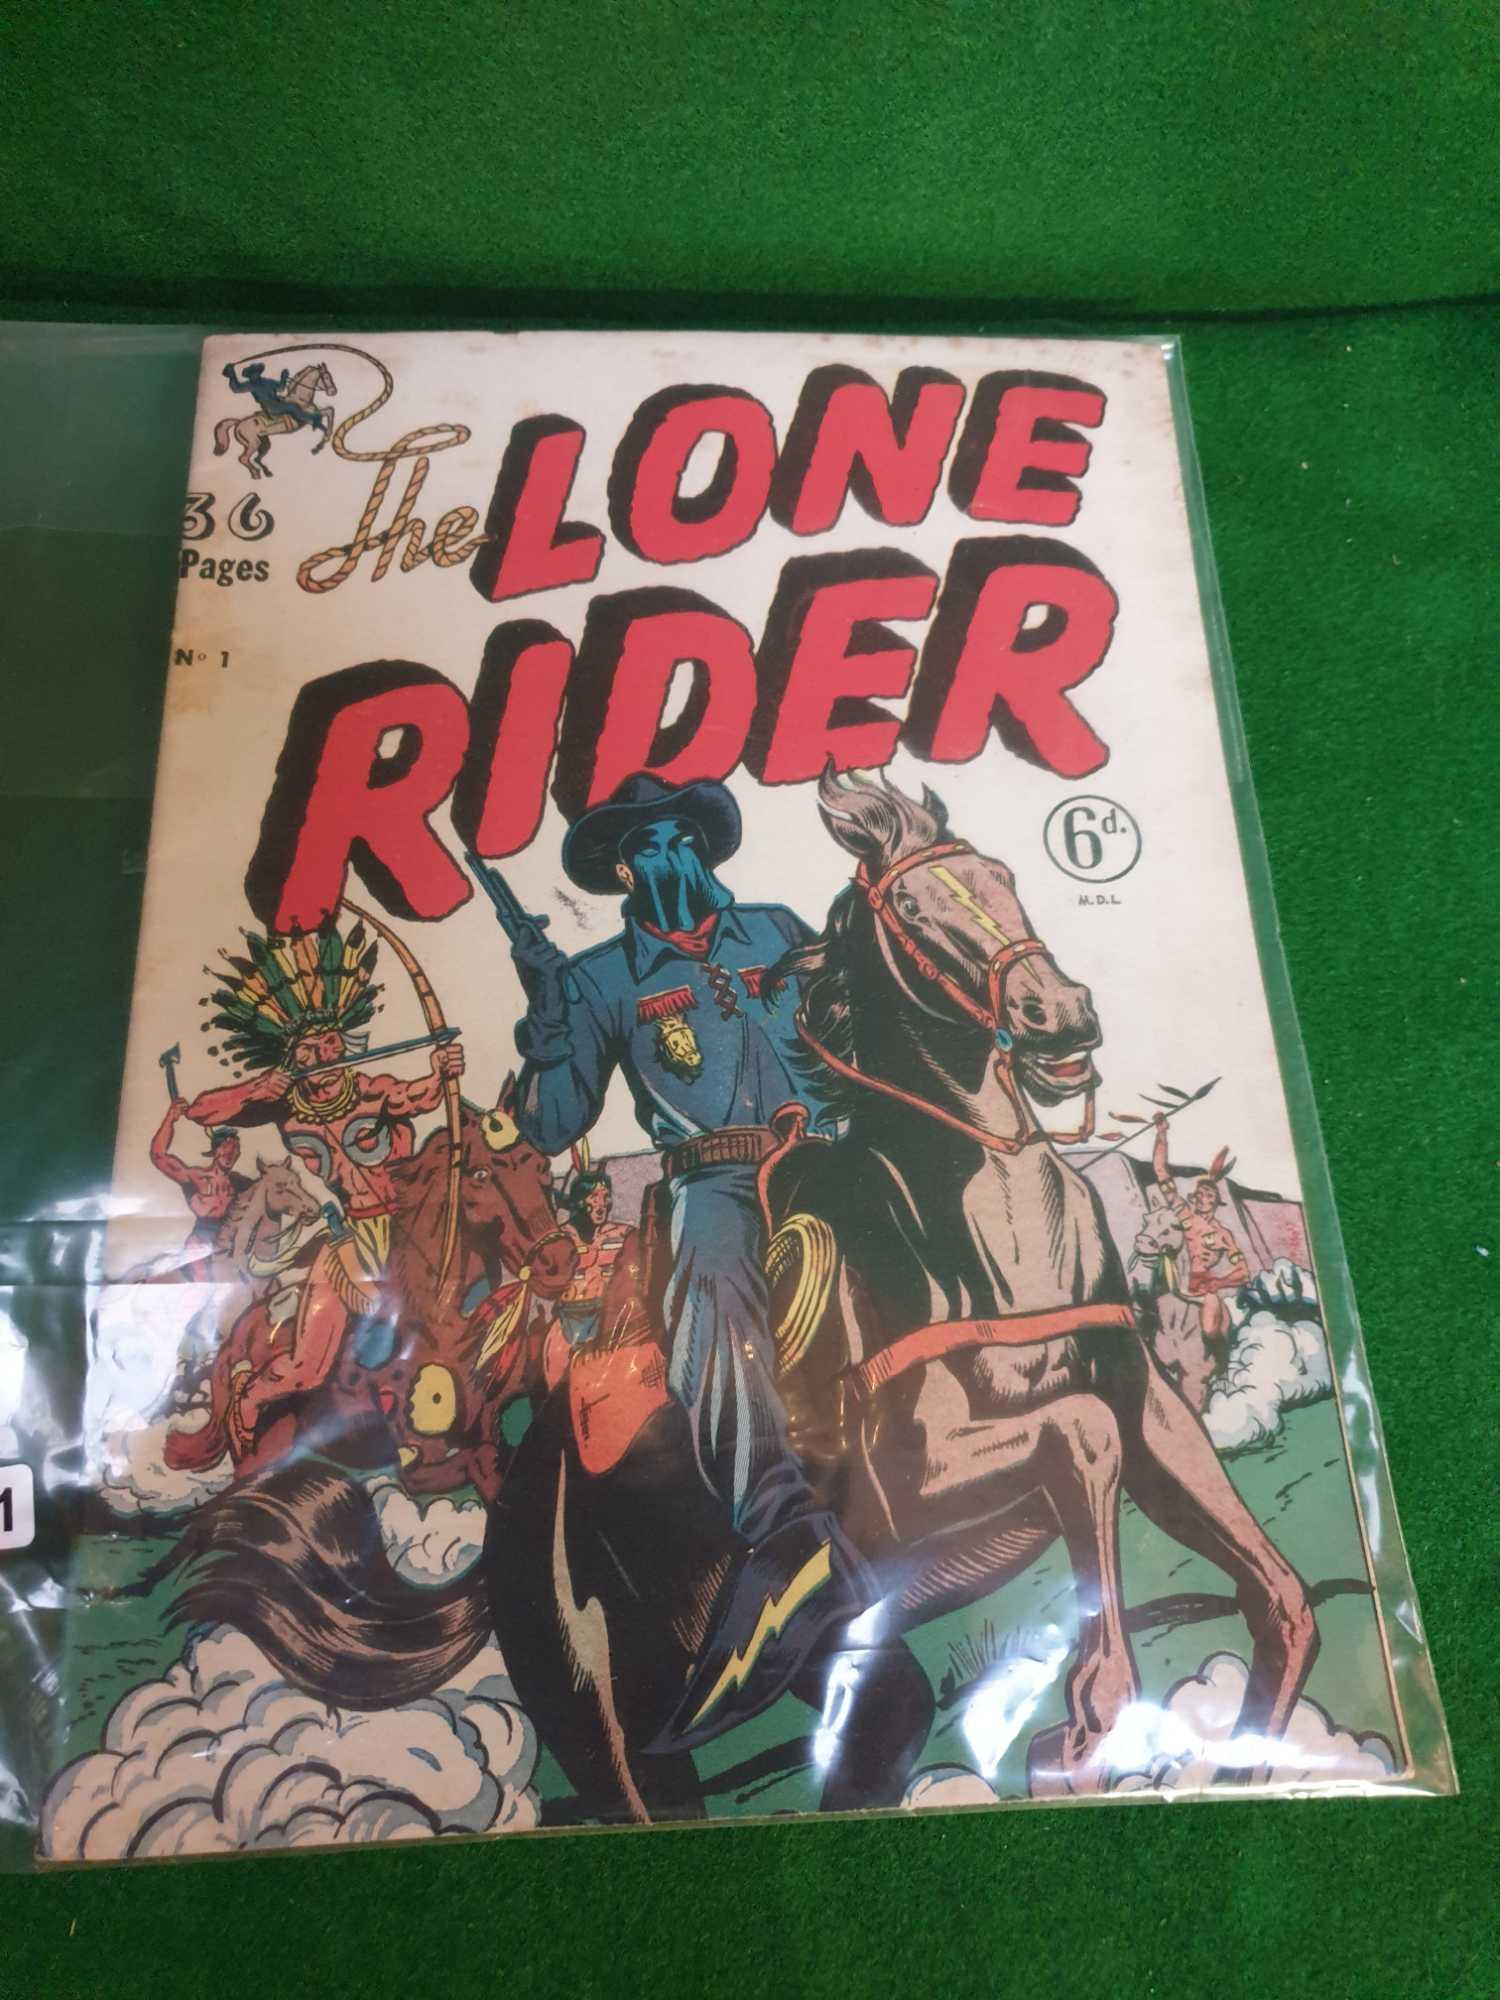 The Lone Rider #1 (April 1951) The Greatest Trail Blazer Farrell, 1951 Series